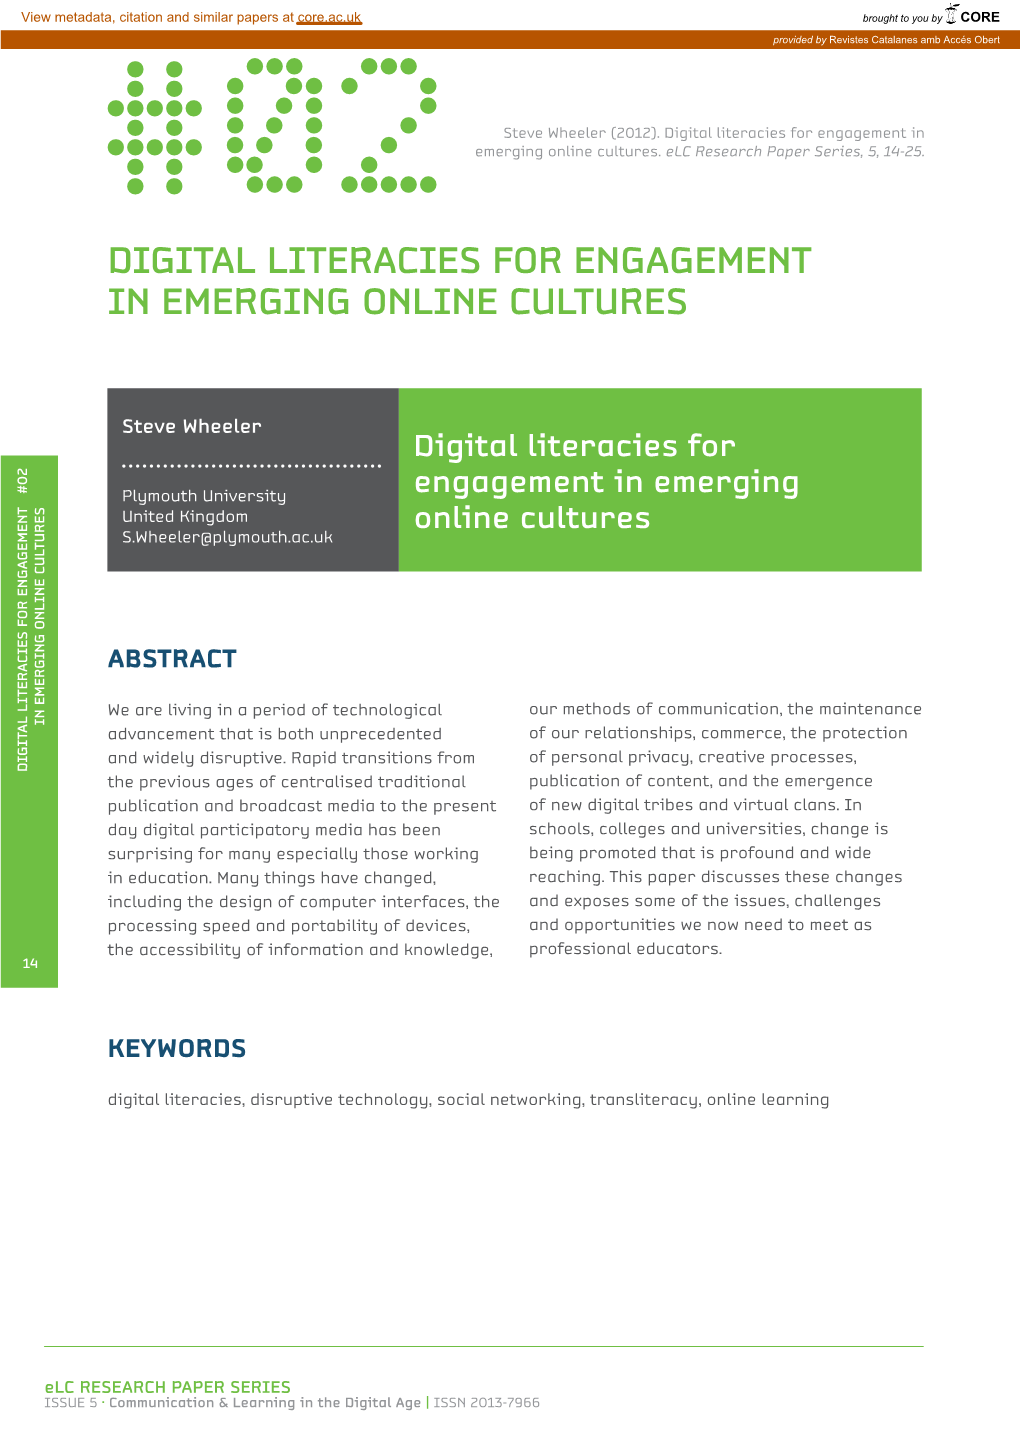 Digital Literacies for Engagement in Emerging Online Cultures